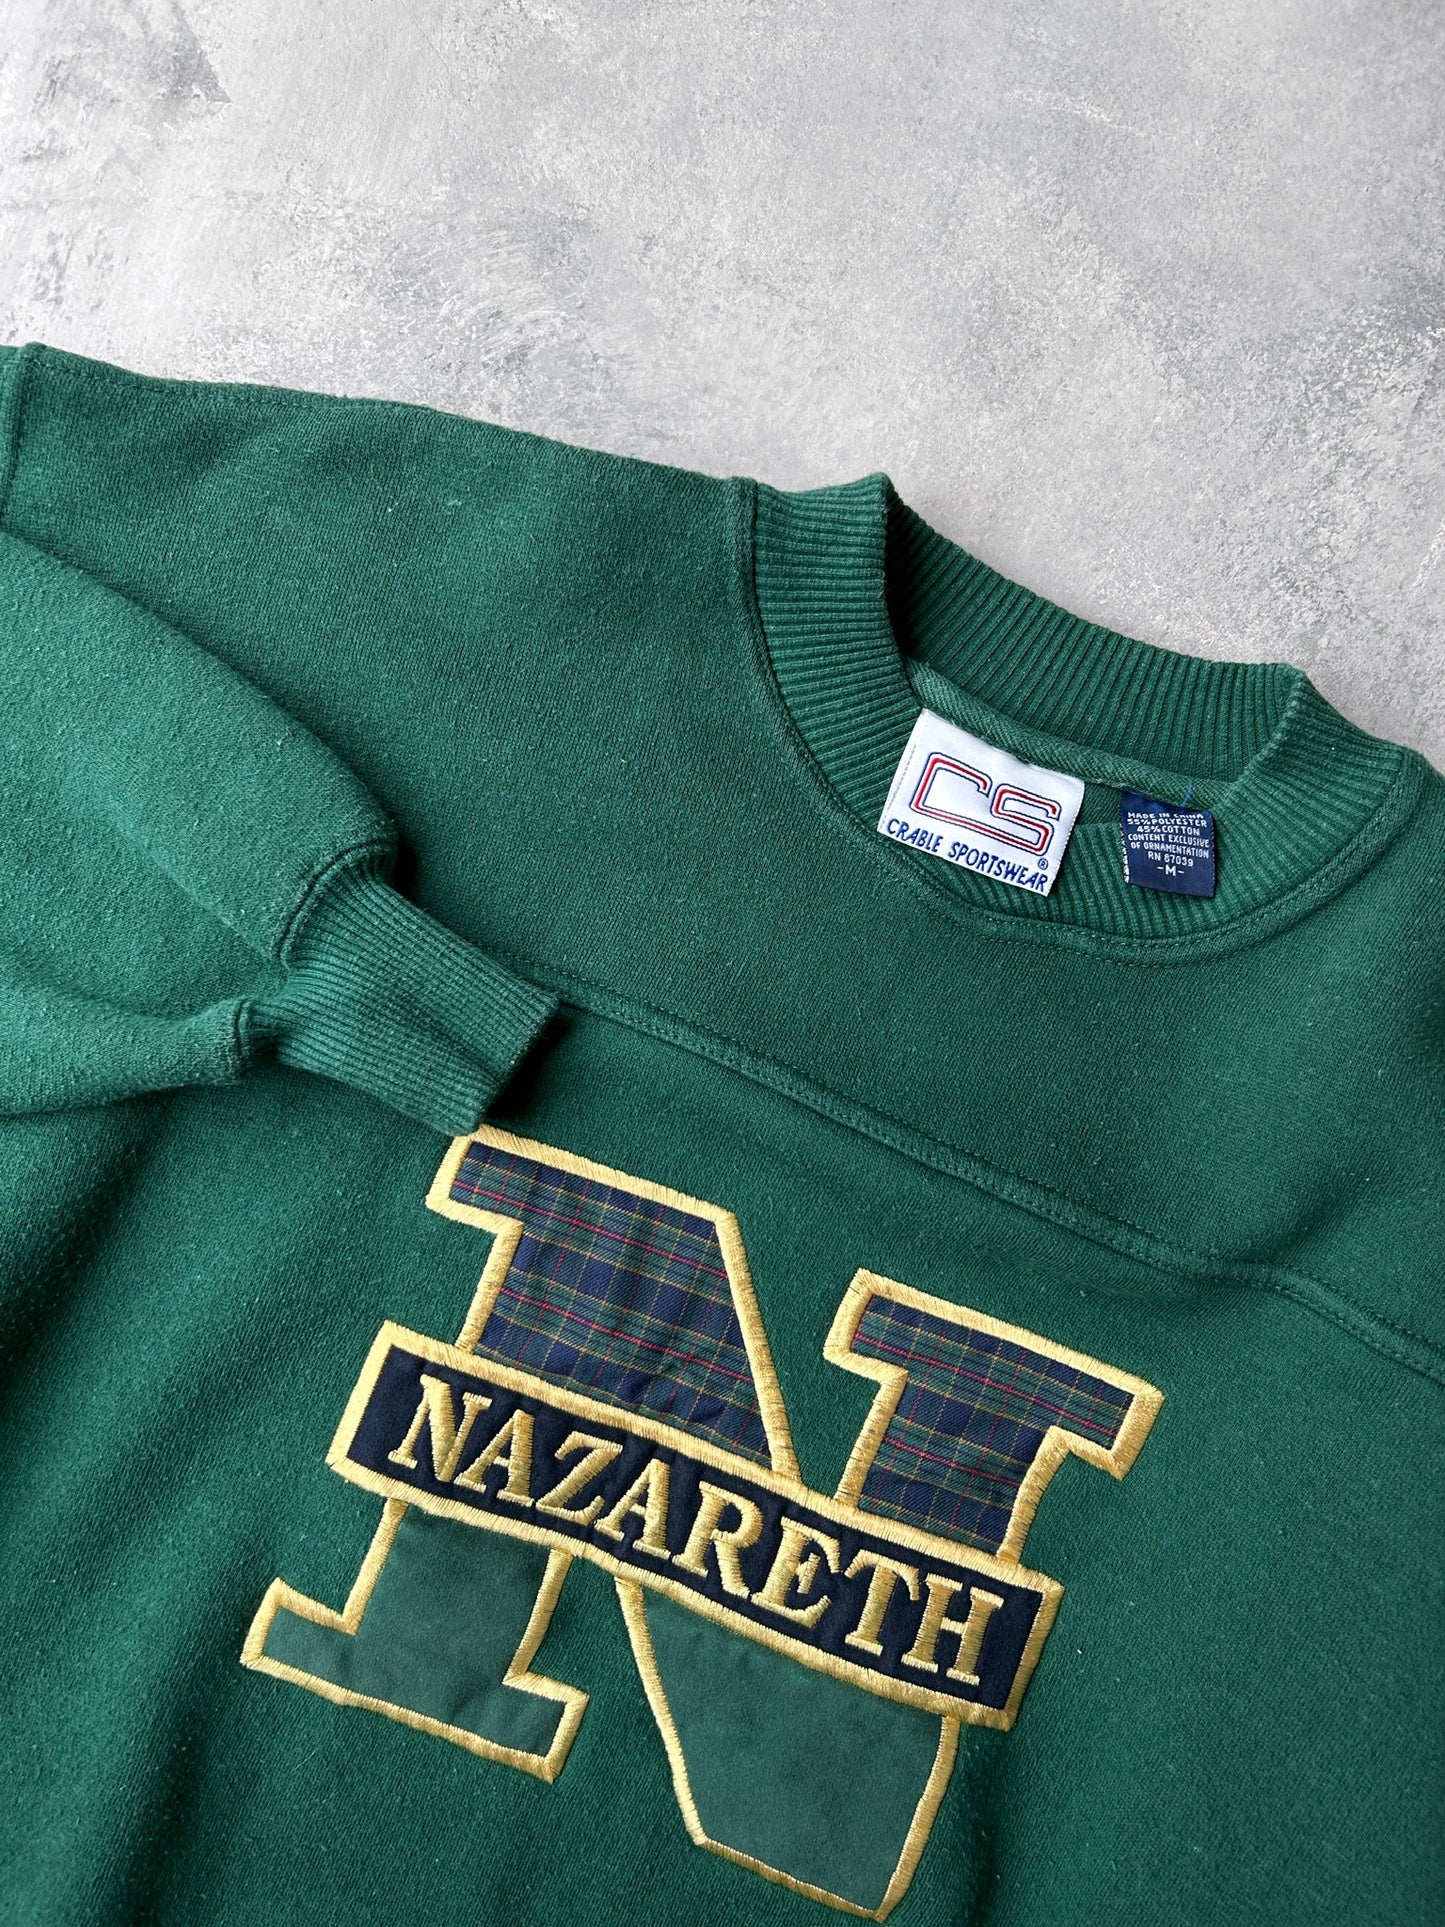 Nazareth University Sweatshirt 90's - Large